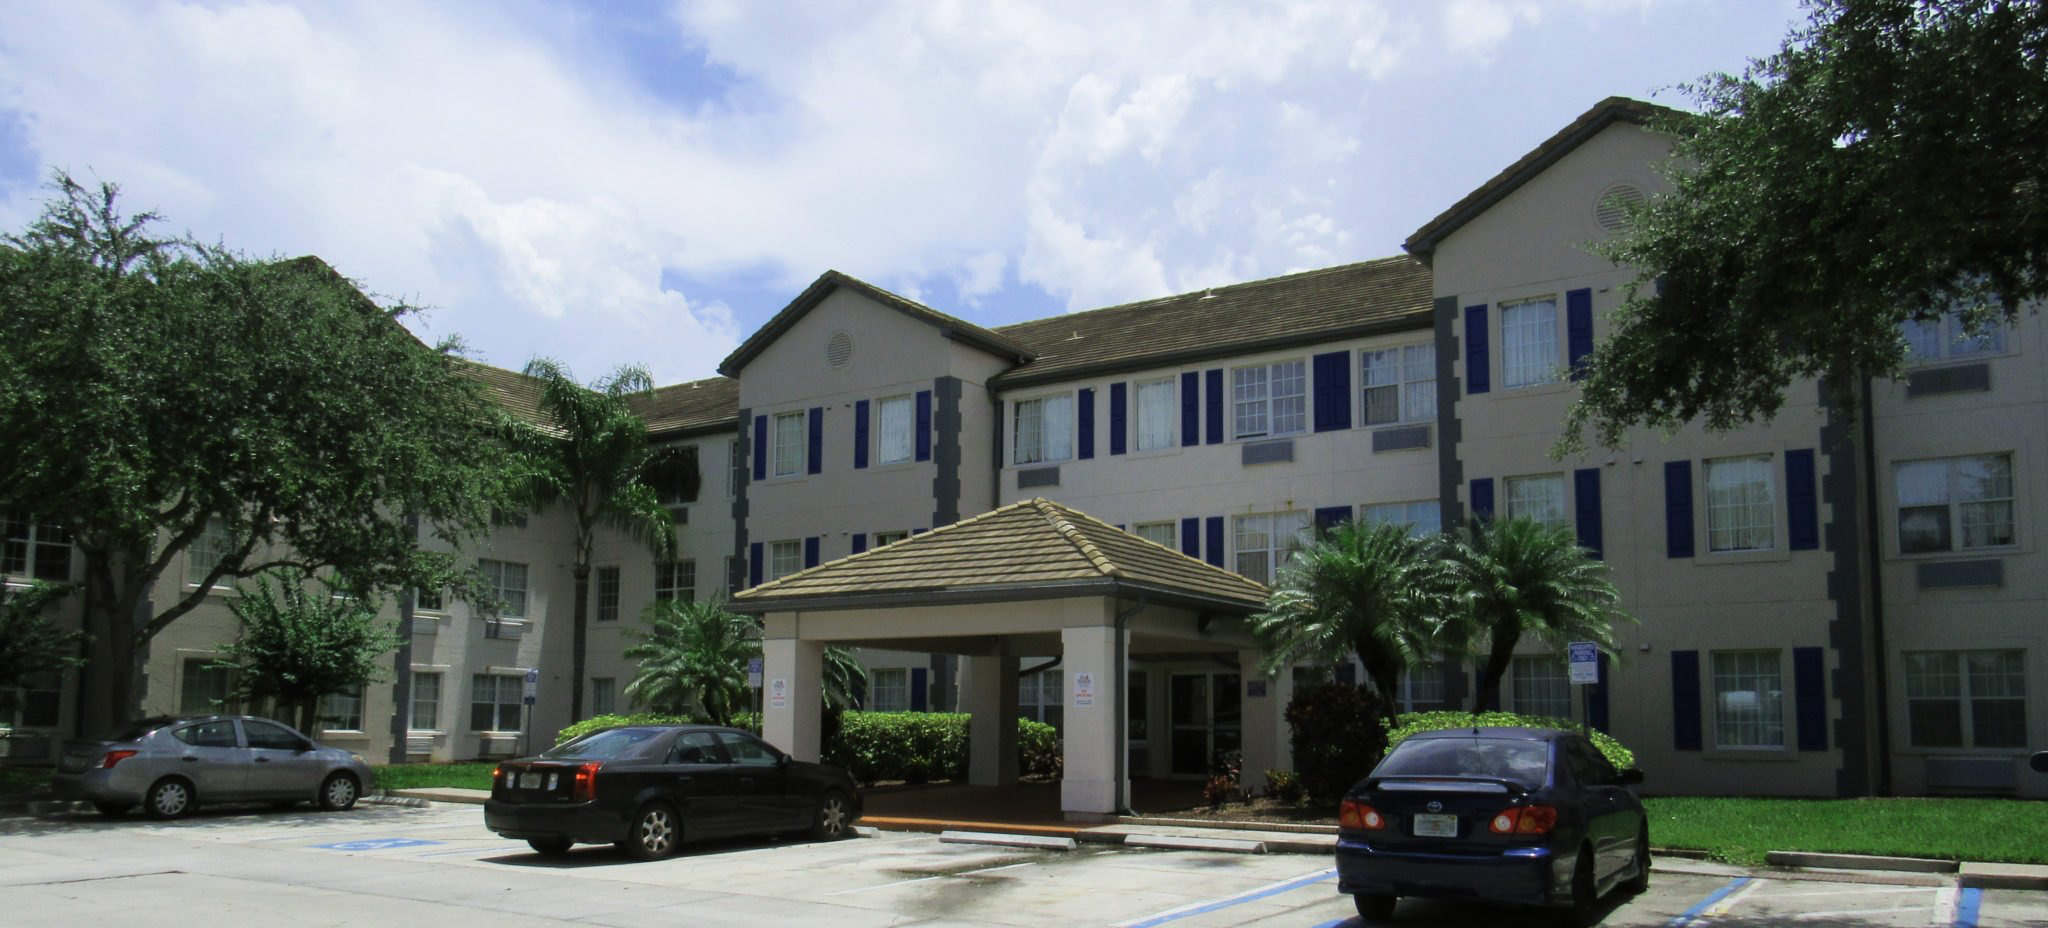 Photo of InTown Suites Orlando Turnpike, Orlando, FL